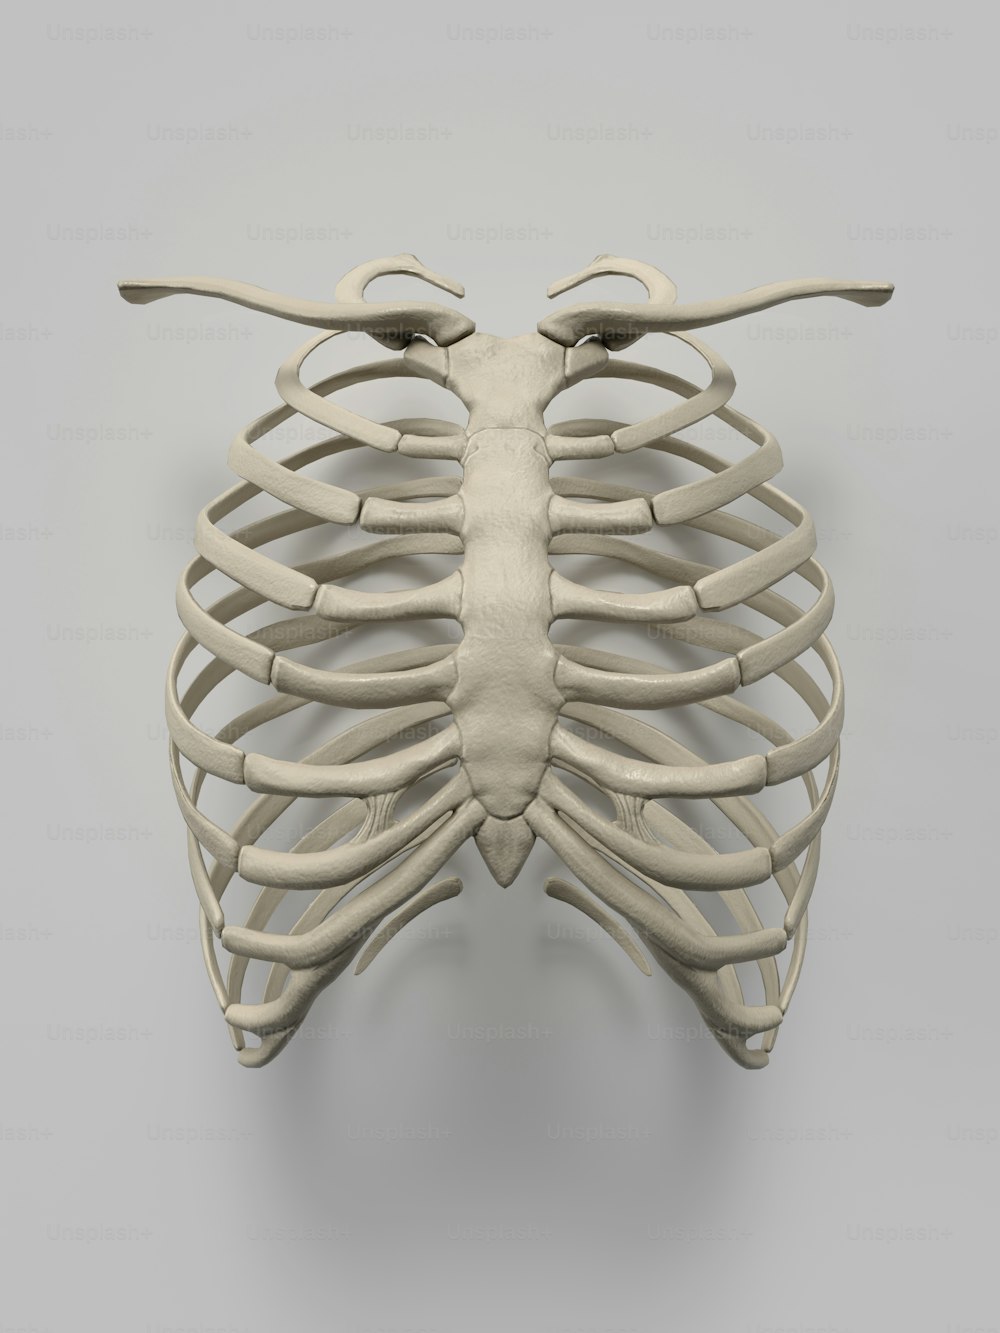 a 3d model of a human rib cage